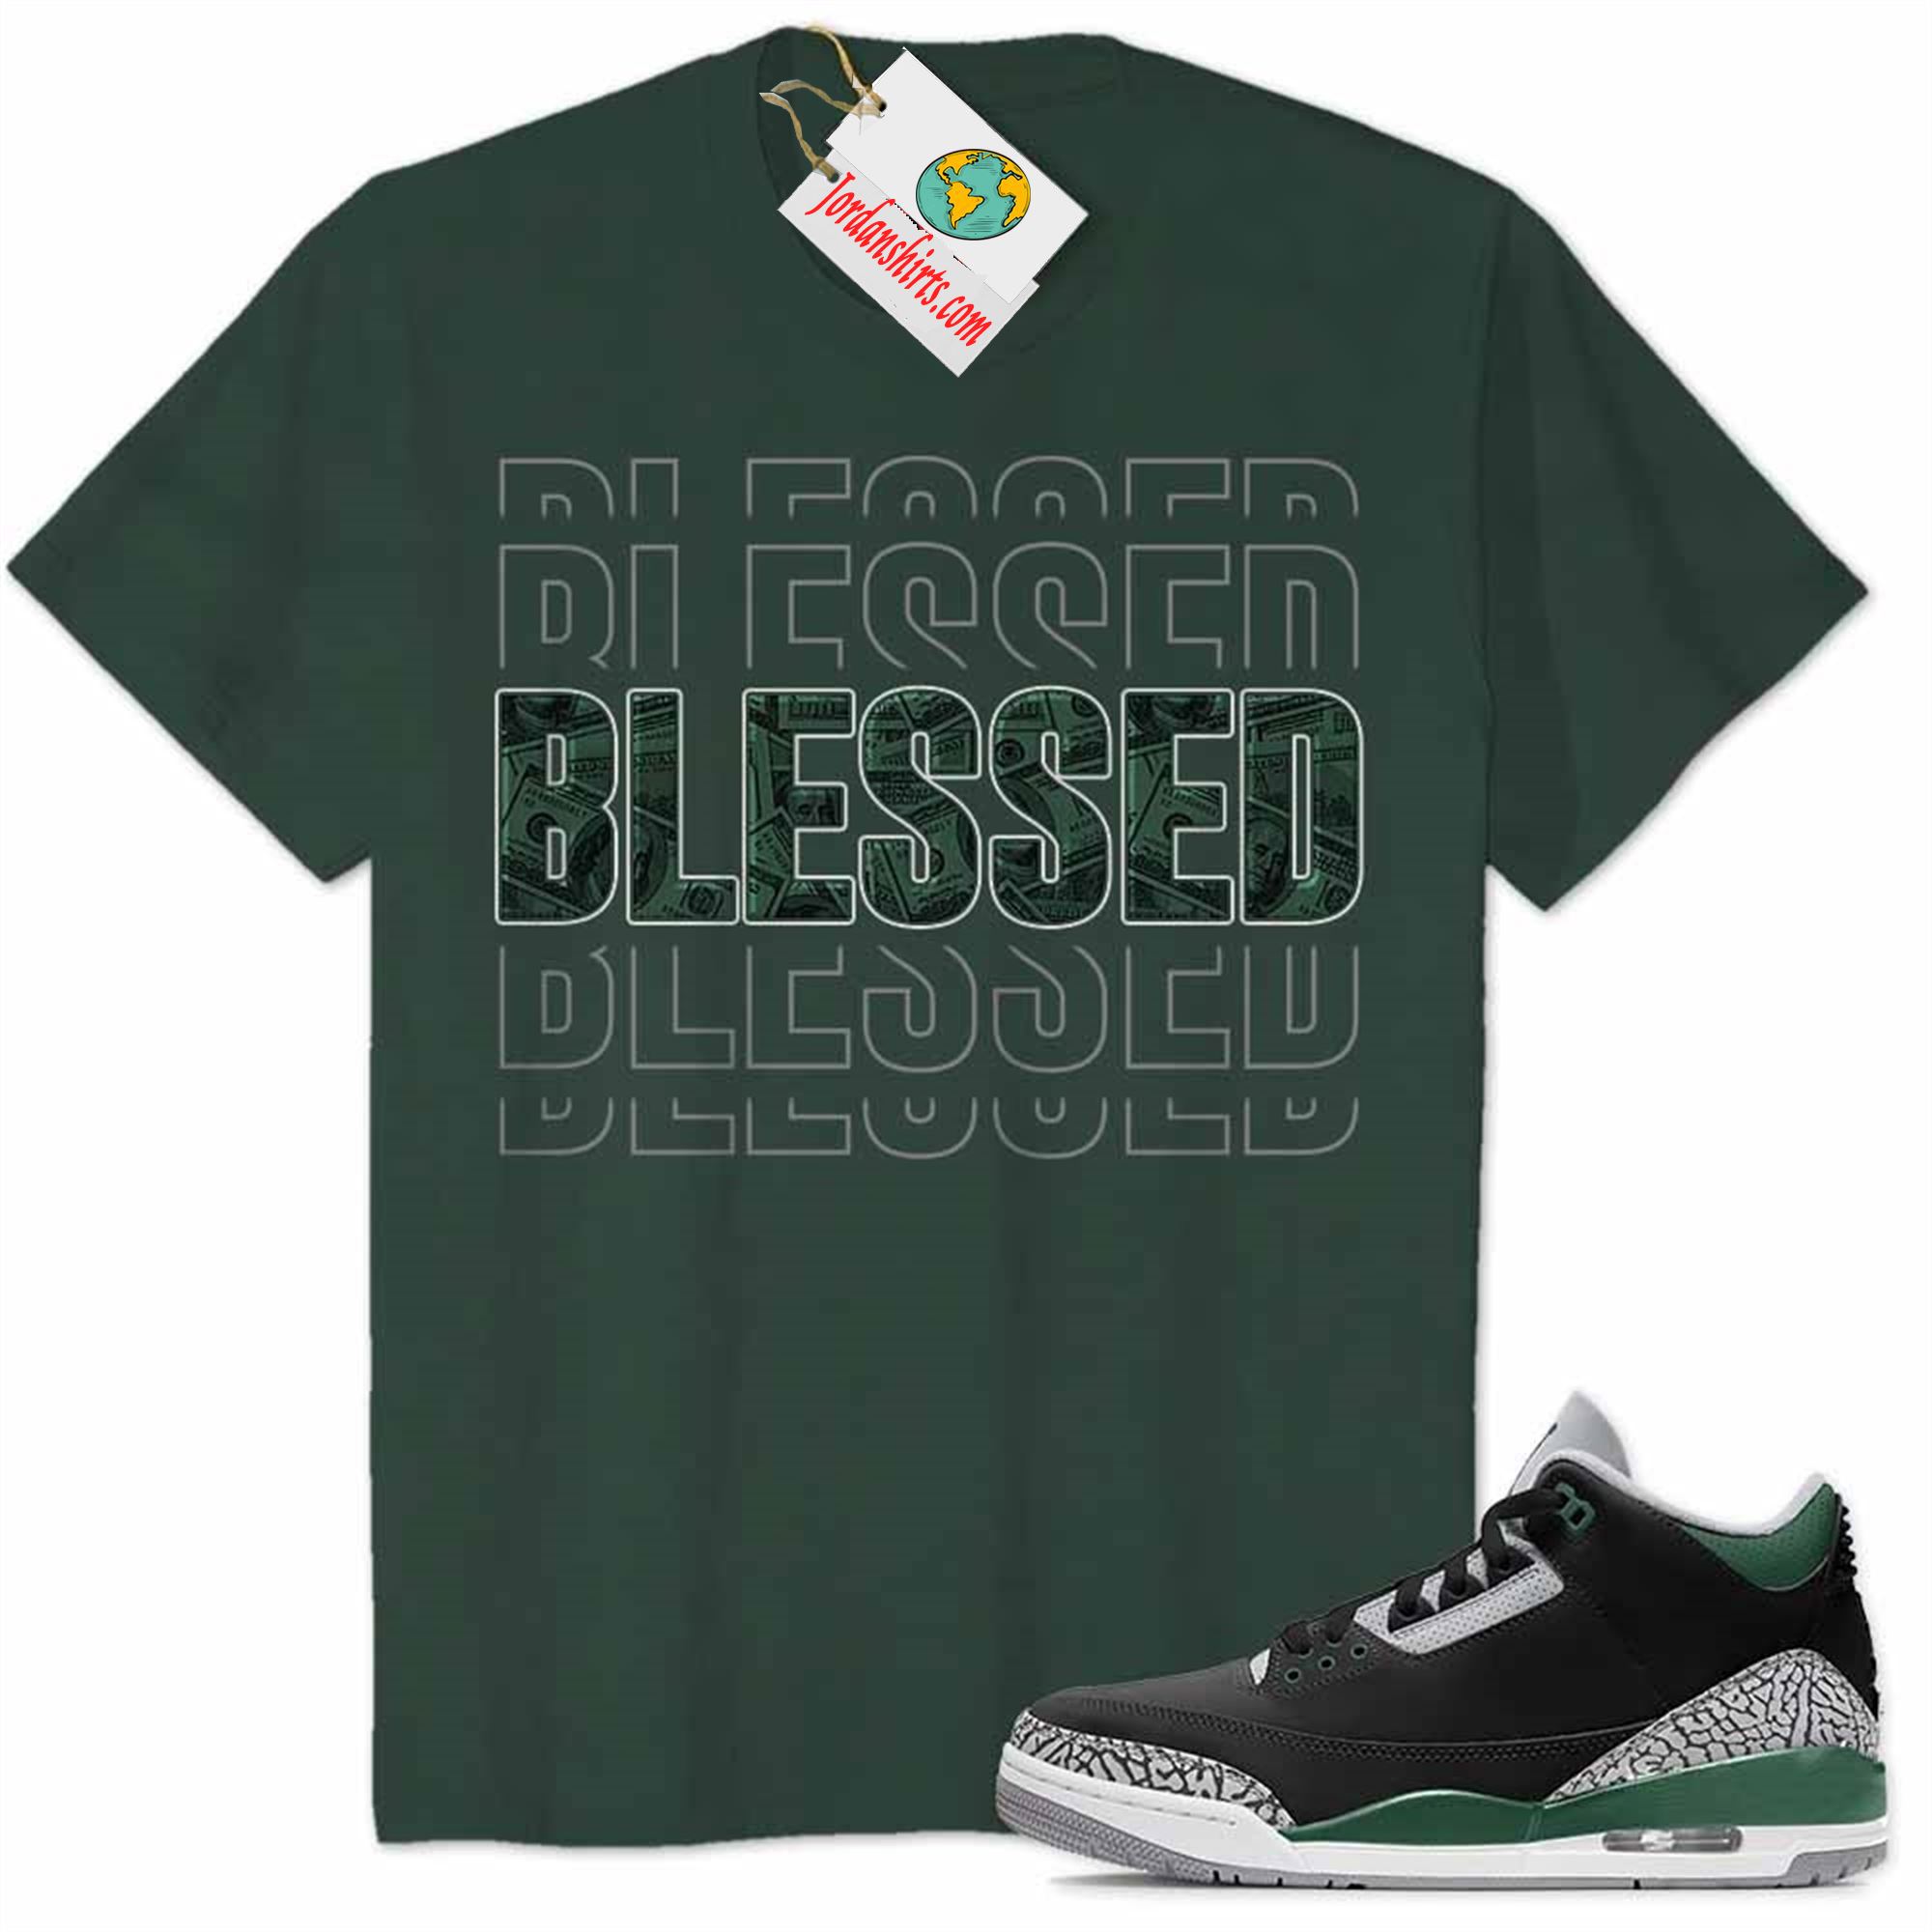 Jordan 3 Shirt, Blessed Dollar Money Forest Air Jordan 3 Pine Green 3s Size Up To 5xl